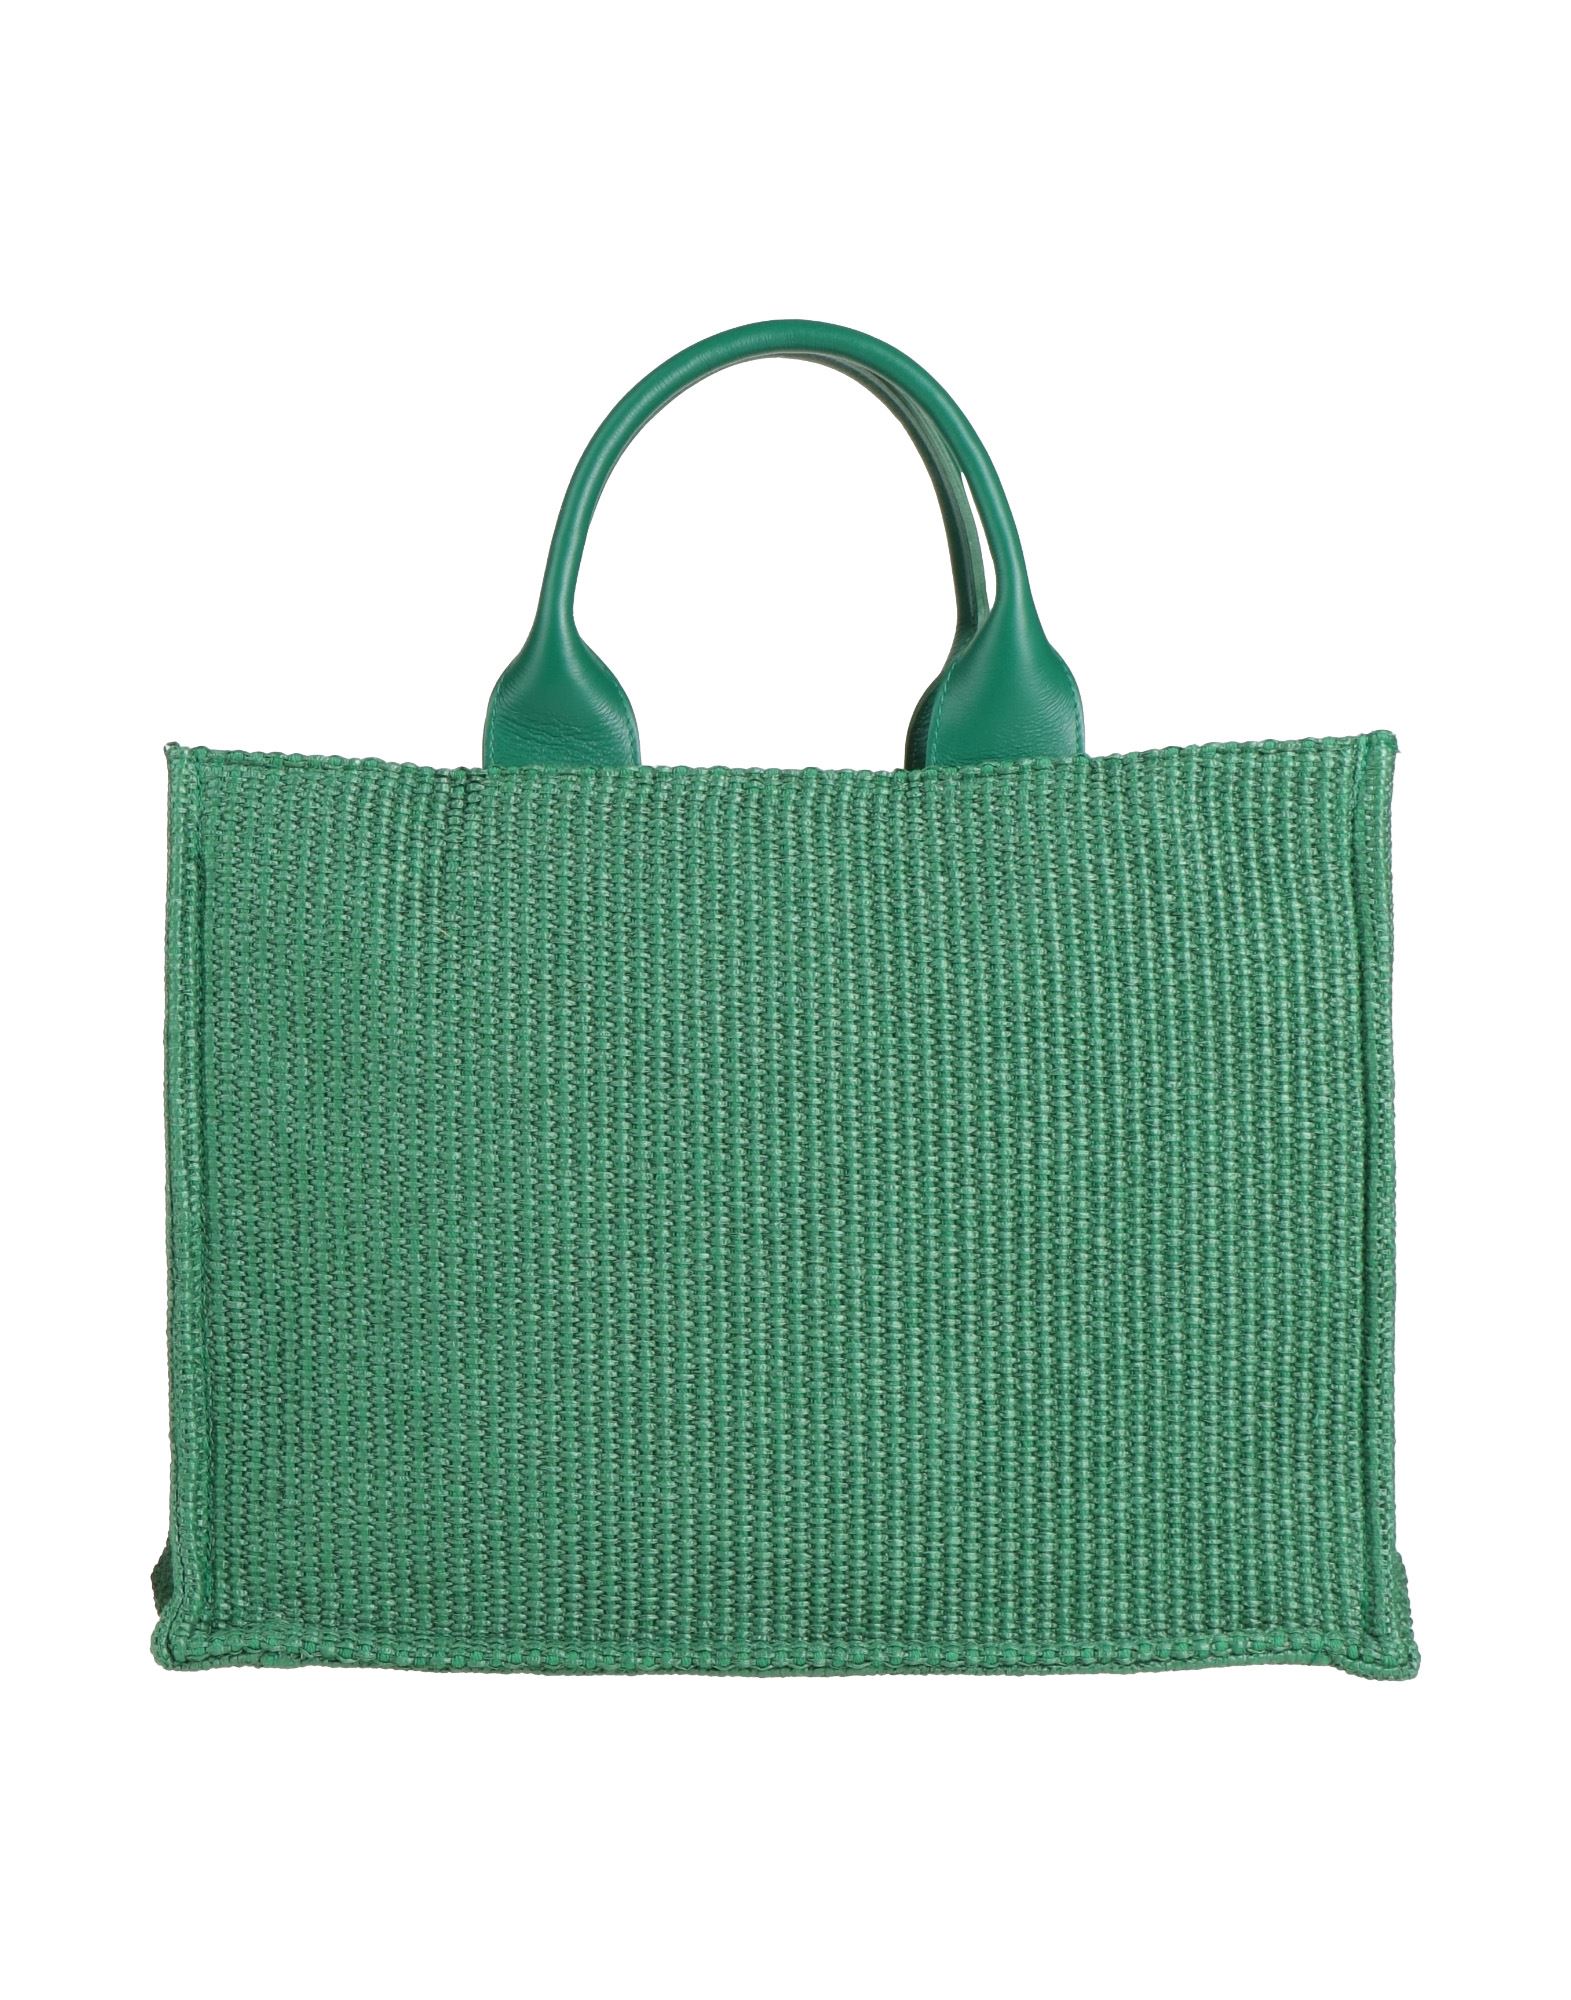 Marc Ellis Handbags In Green